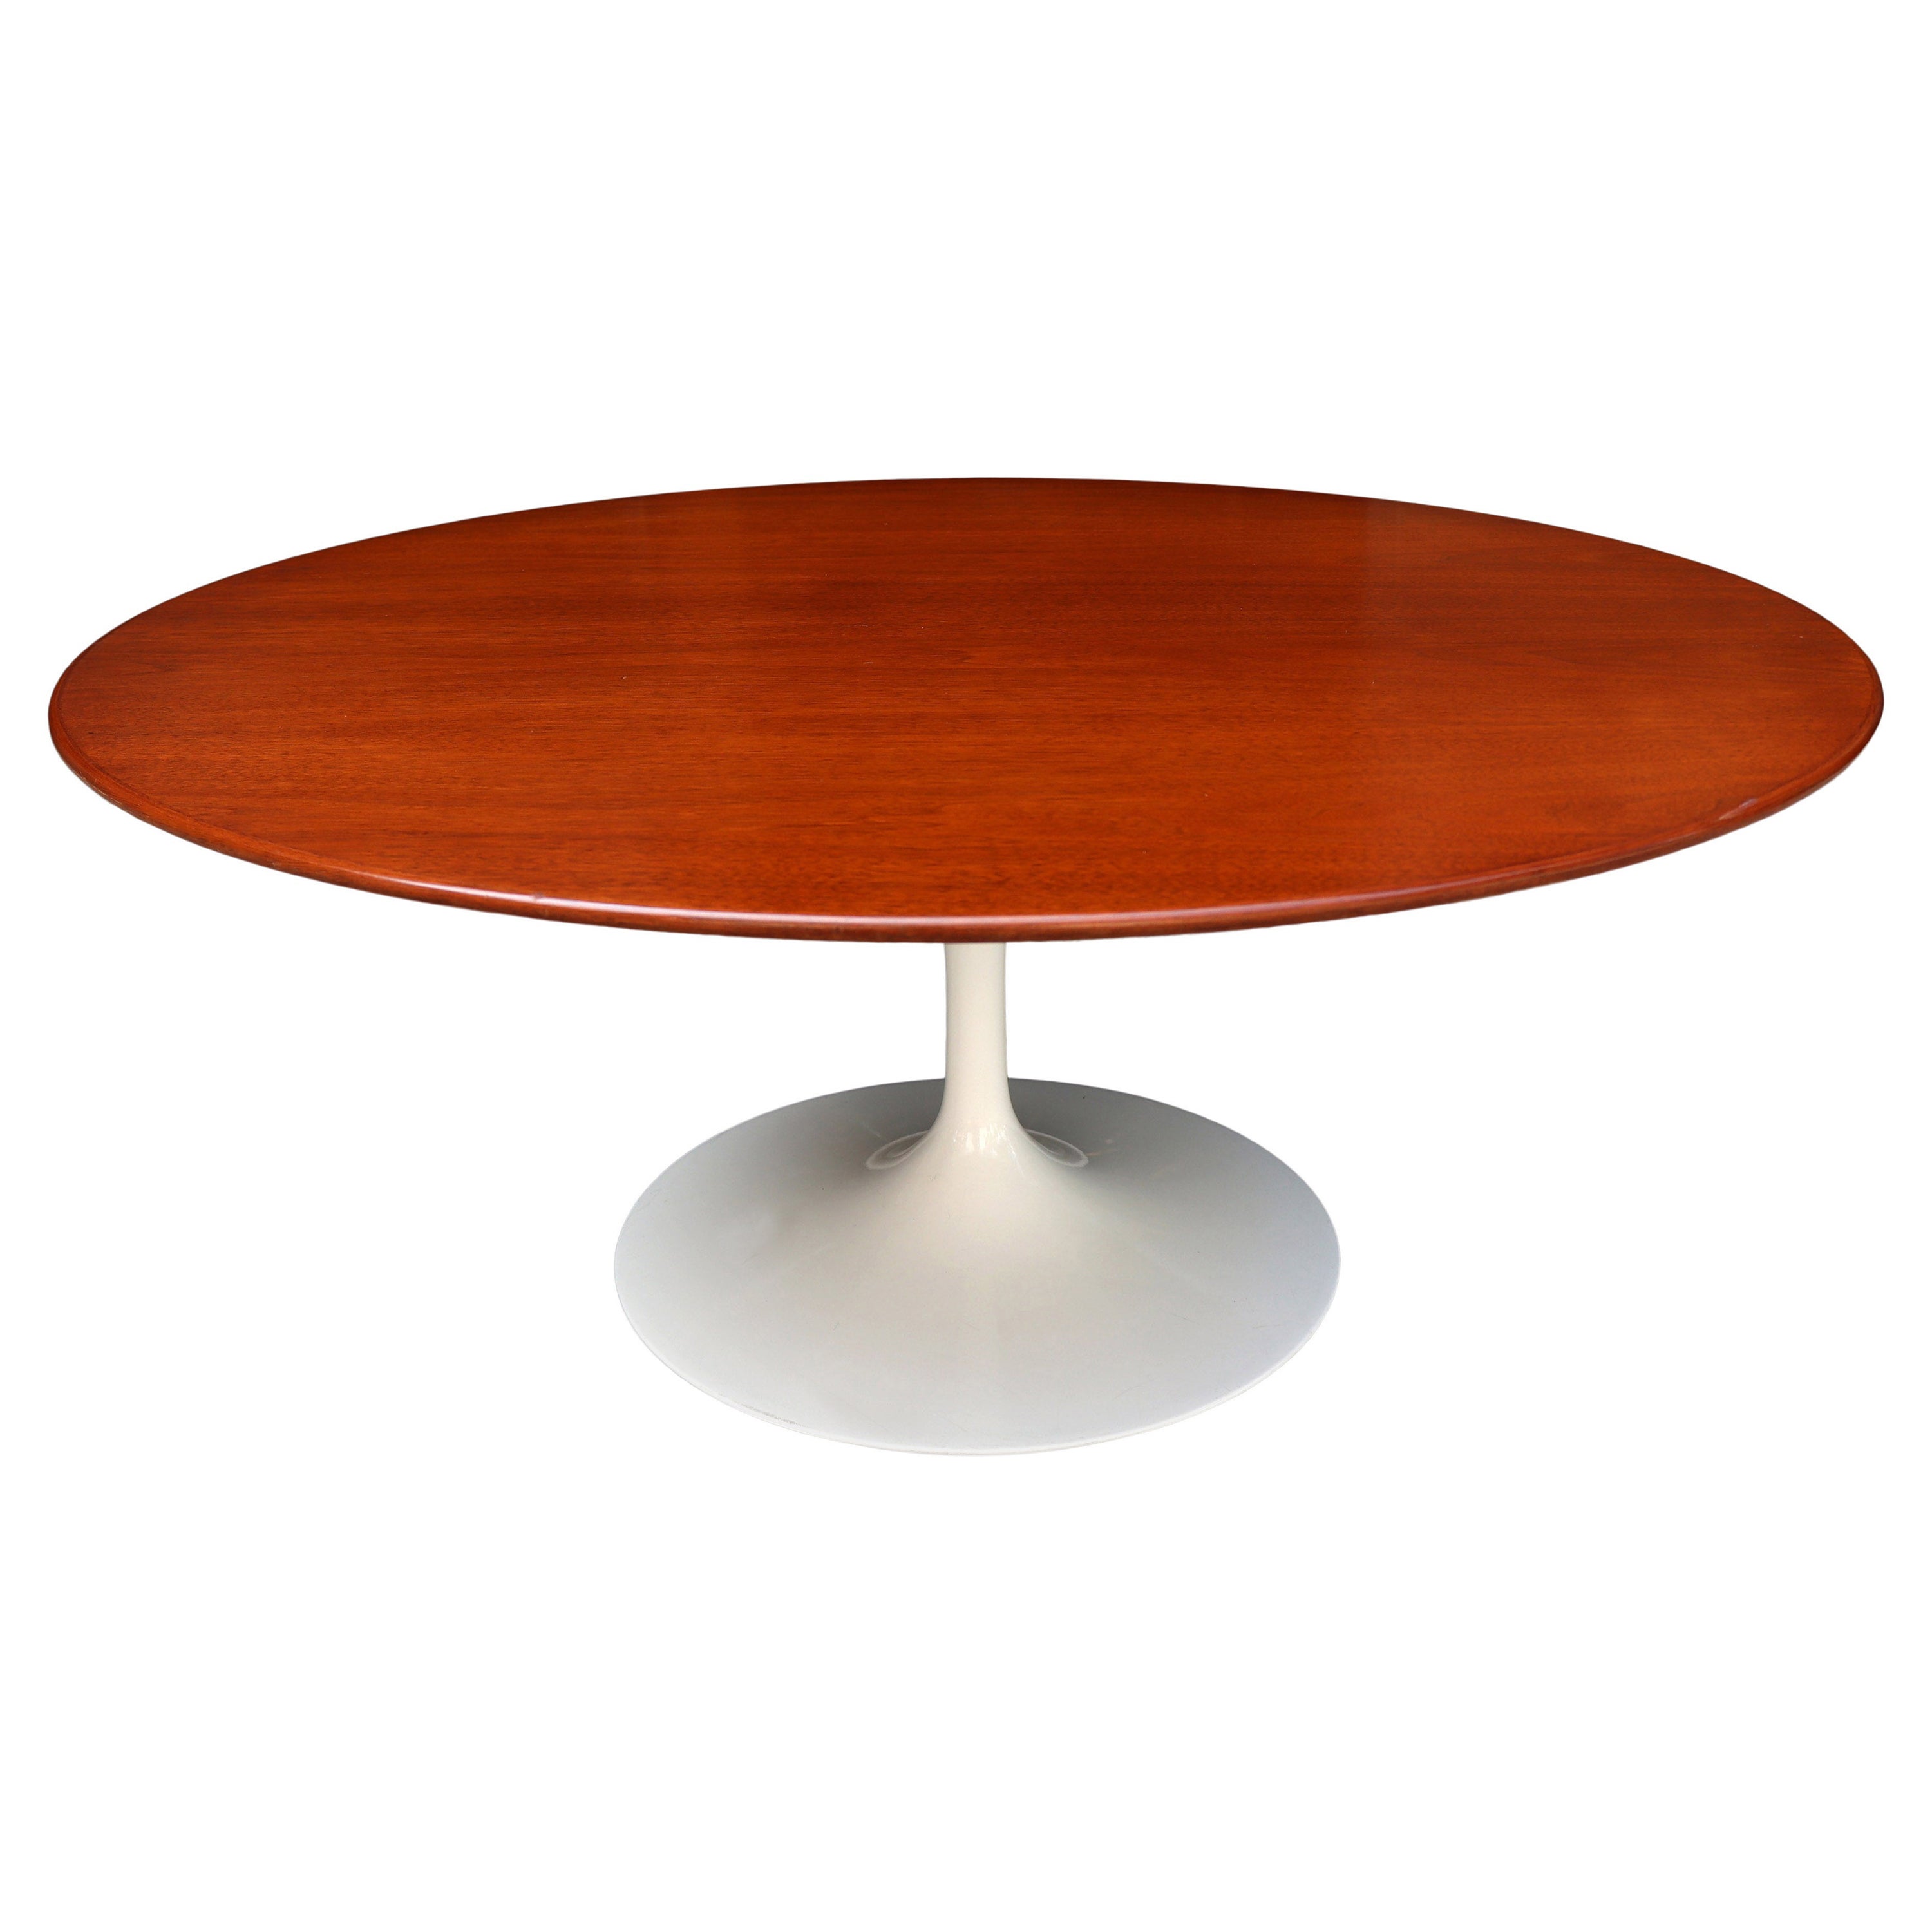 Eero Saarinen for Knoll Round Tulip Coffee Table